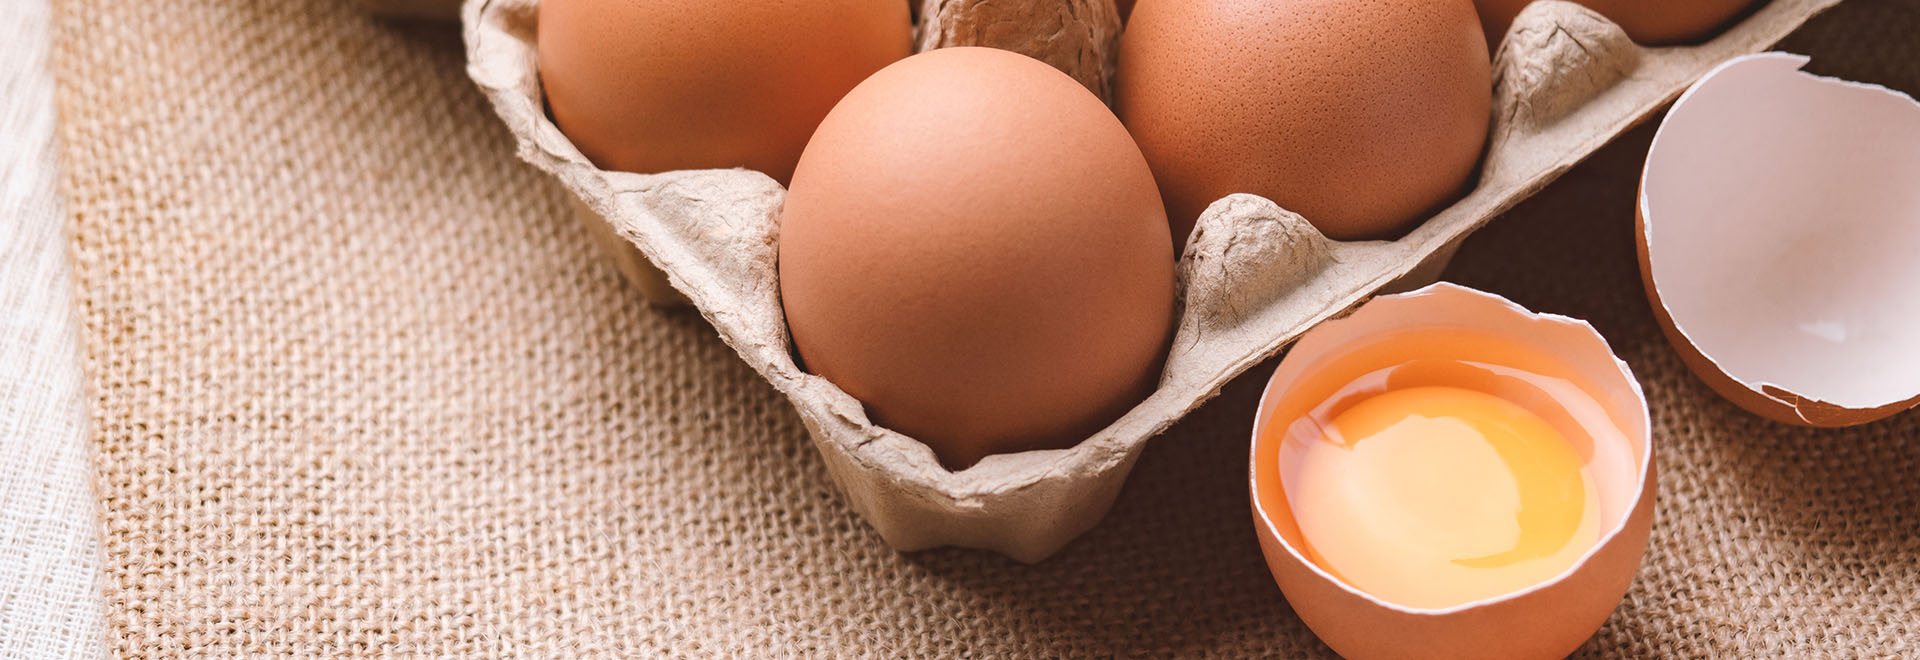 lets-talk-about-eggs